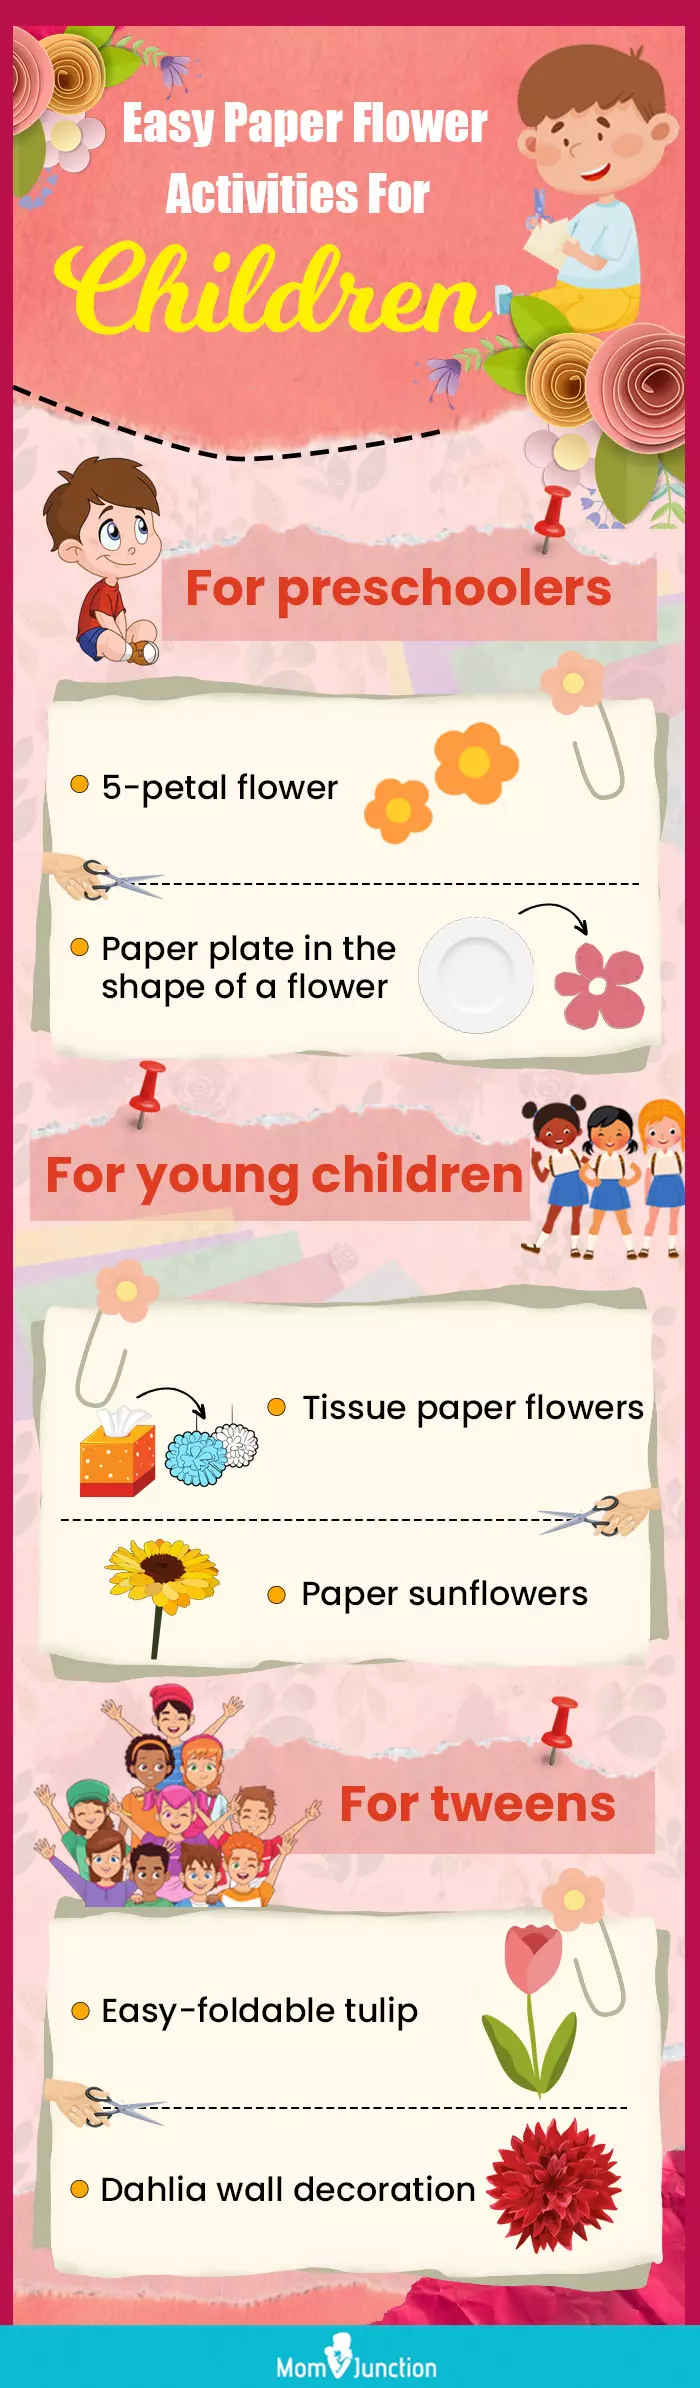 easy paper flower activities for children (infographic)